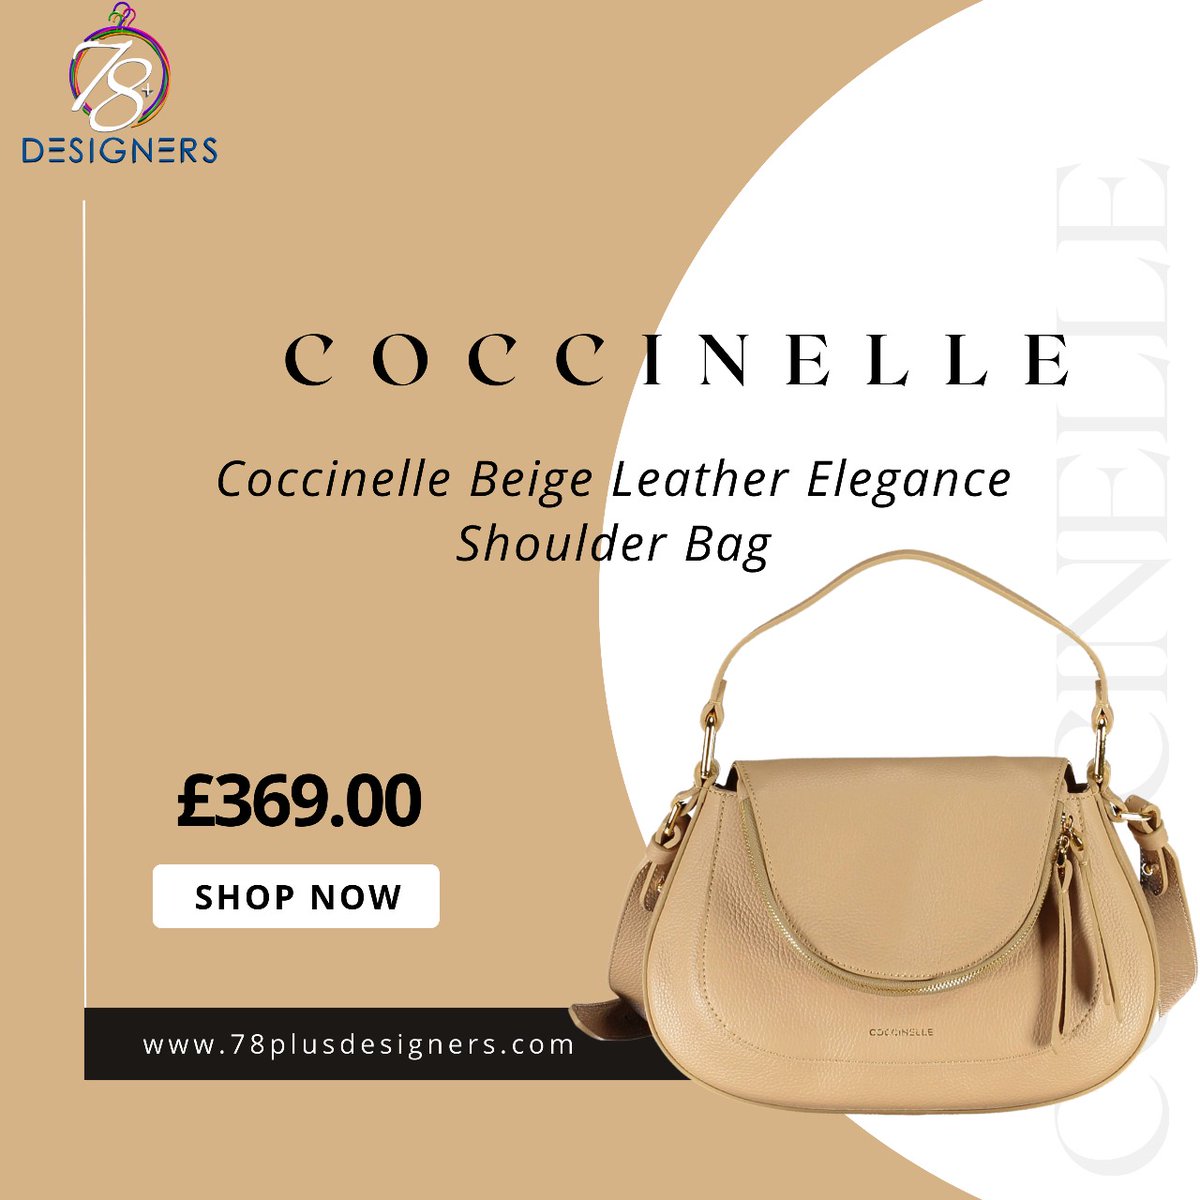 Coccinelle Beige Leather Elegance Shoulder Bag
.
.
Visit us: 78plusdesigners.com
.
.
#78plusdesigners #CoccinelleFashion #LeatherLove #EleganceEveryday #FashionForward #LuxuryHandbags #BeigeBeauty
#ShoulderBagStyle